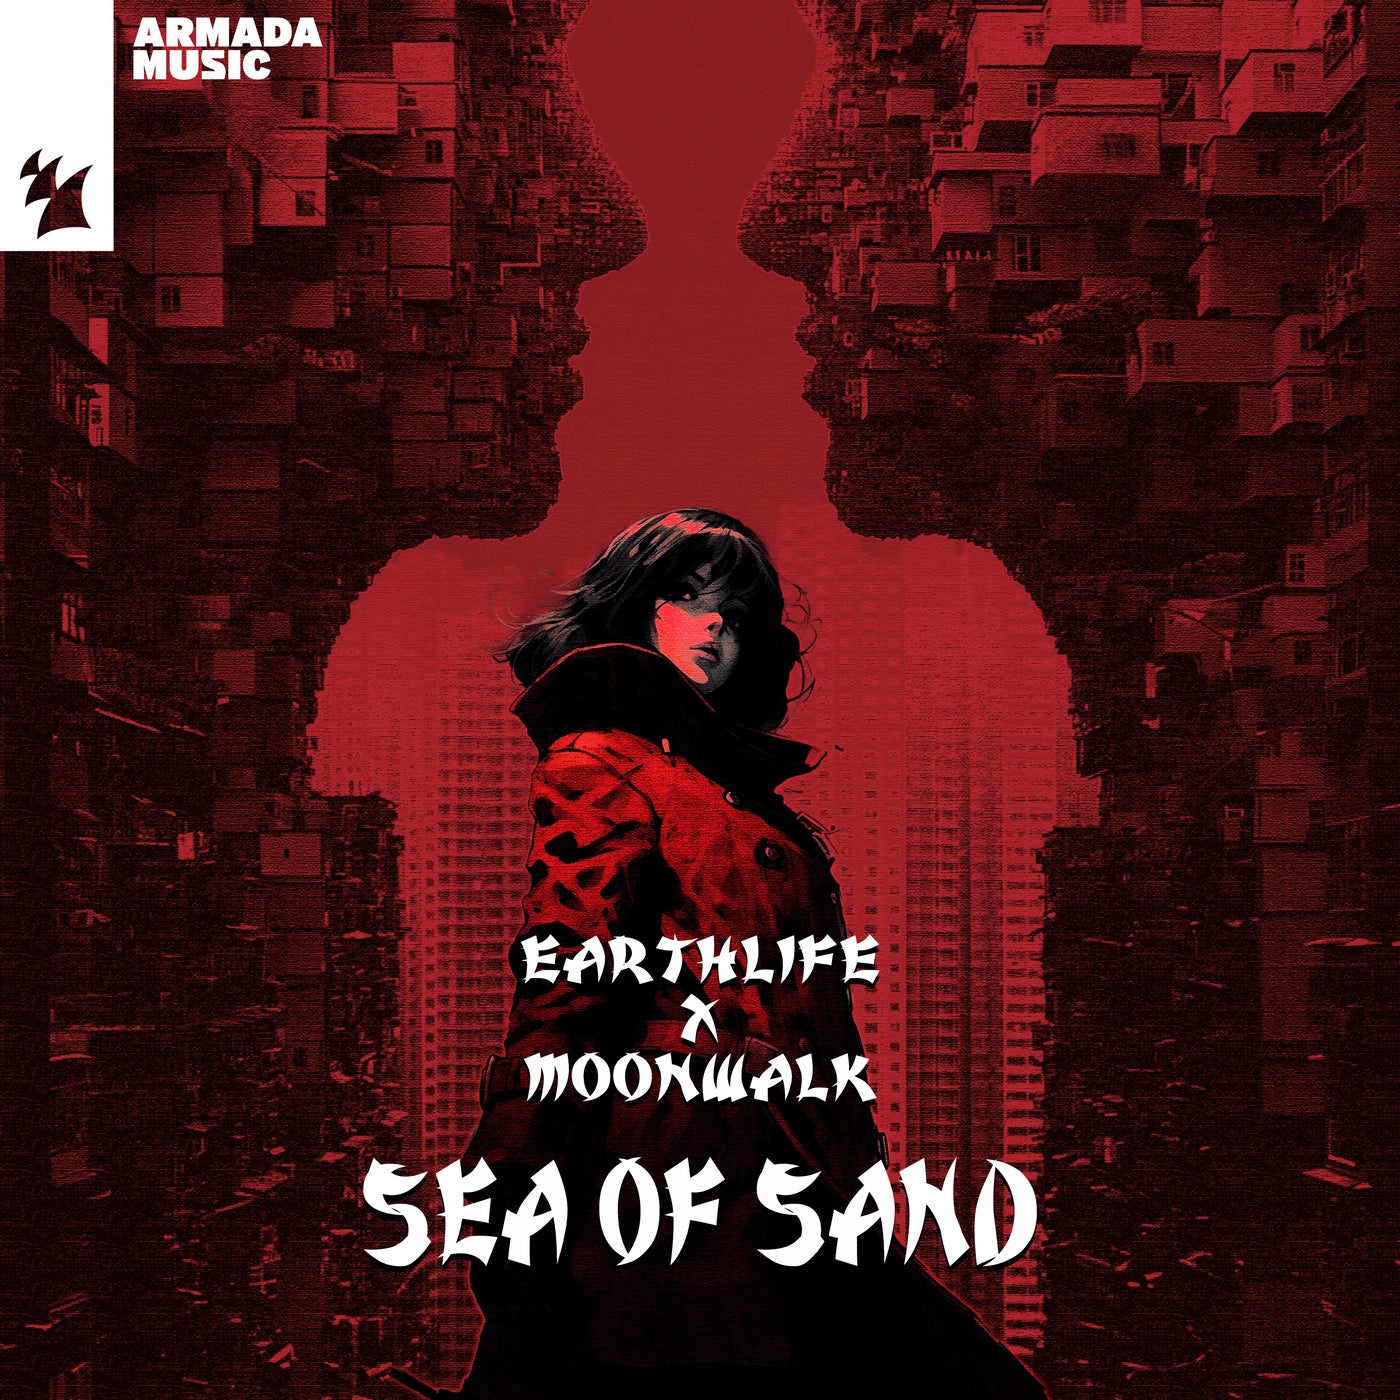 image cover: Moonwalk, EarthLife - Sea Of Sand on Armada Music